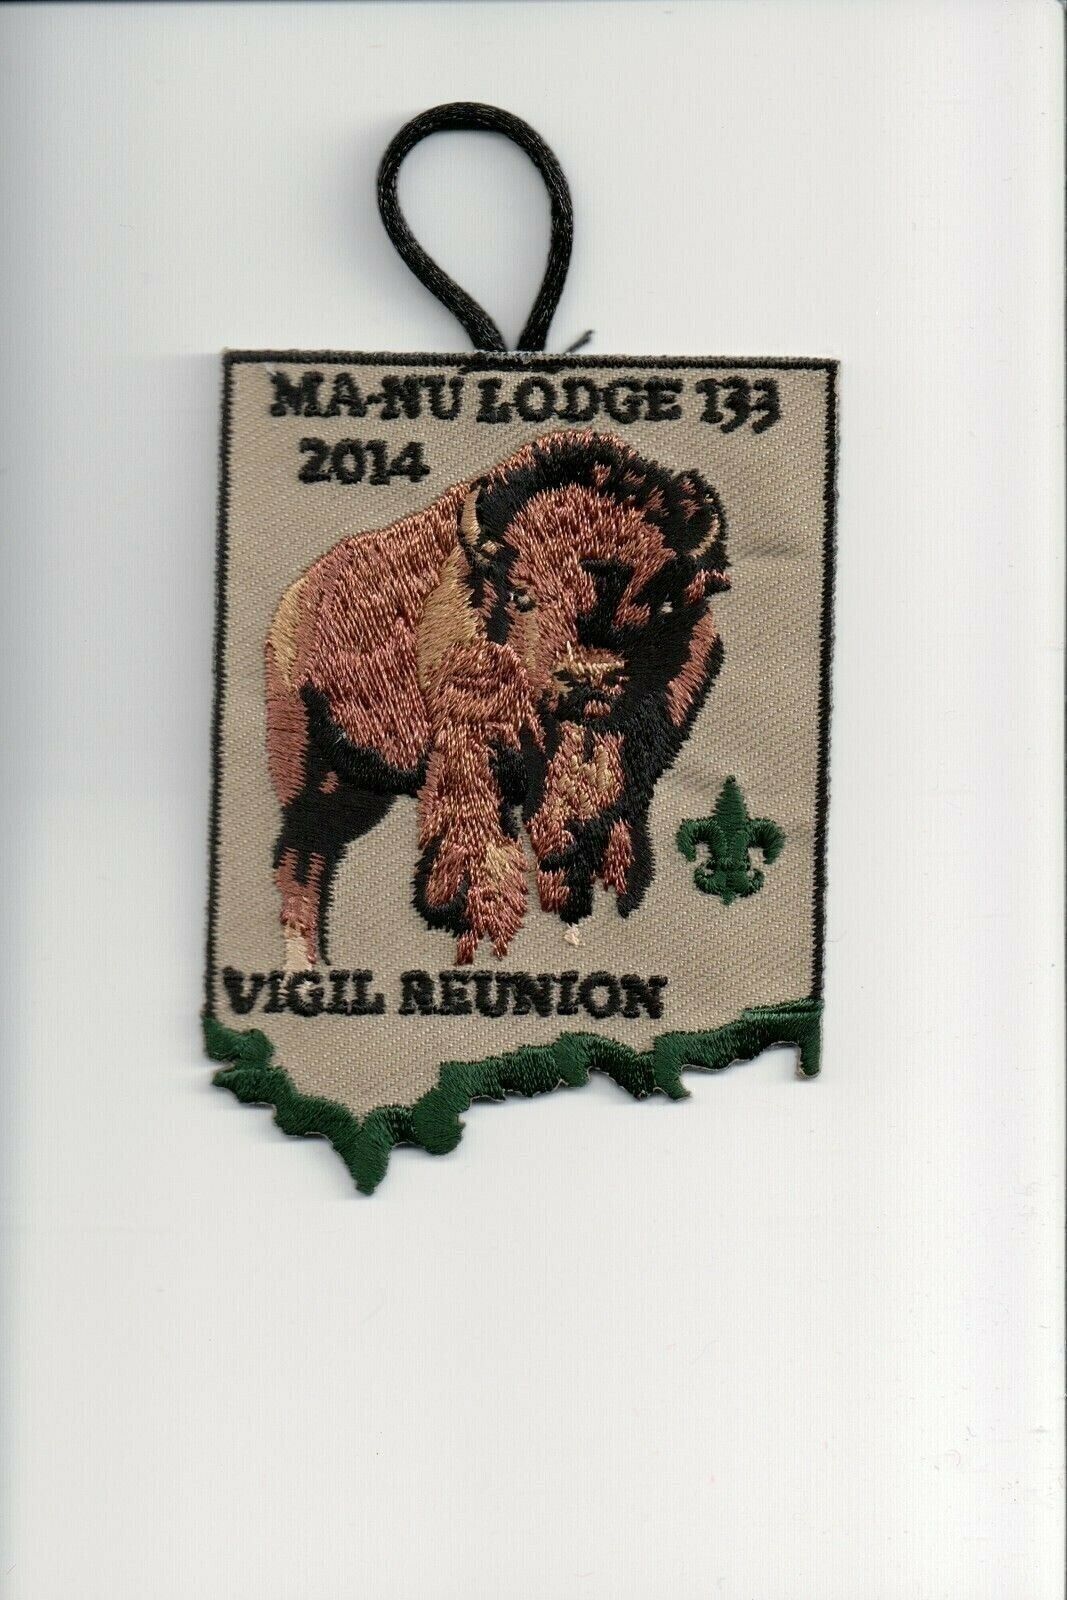 2014 Lodge 133 Vigil Reunion patch